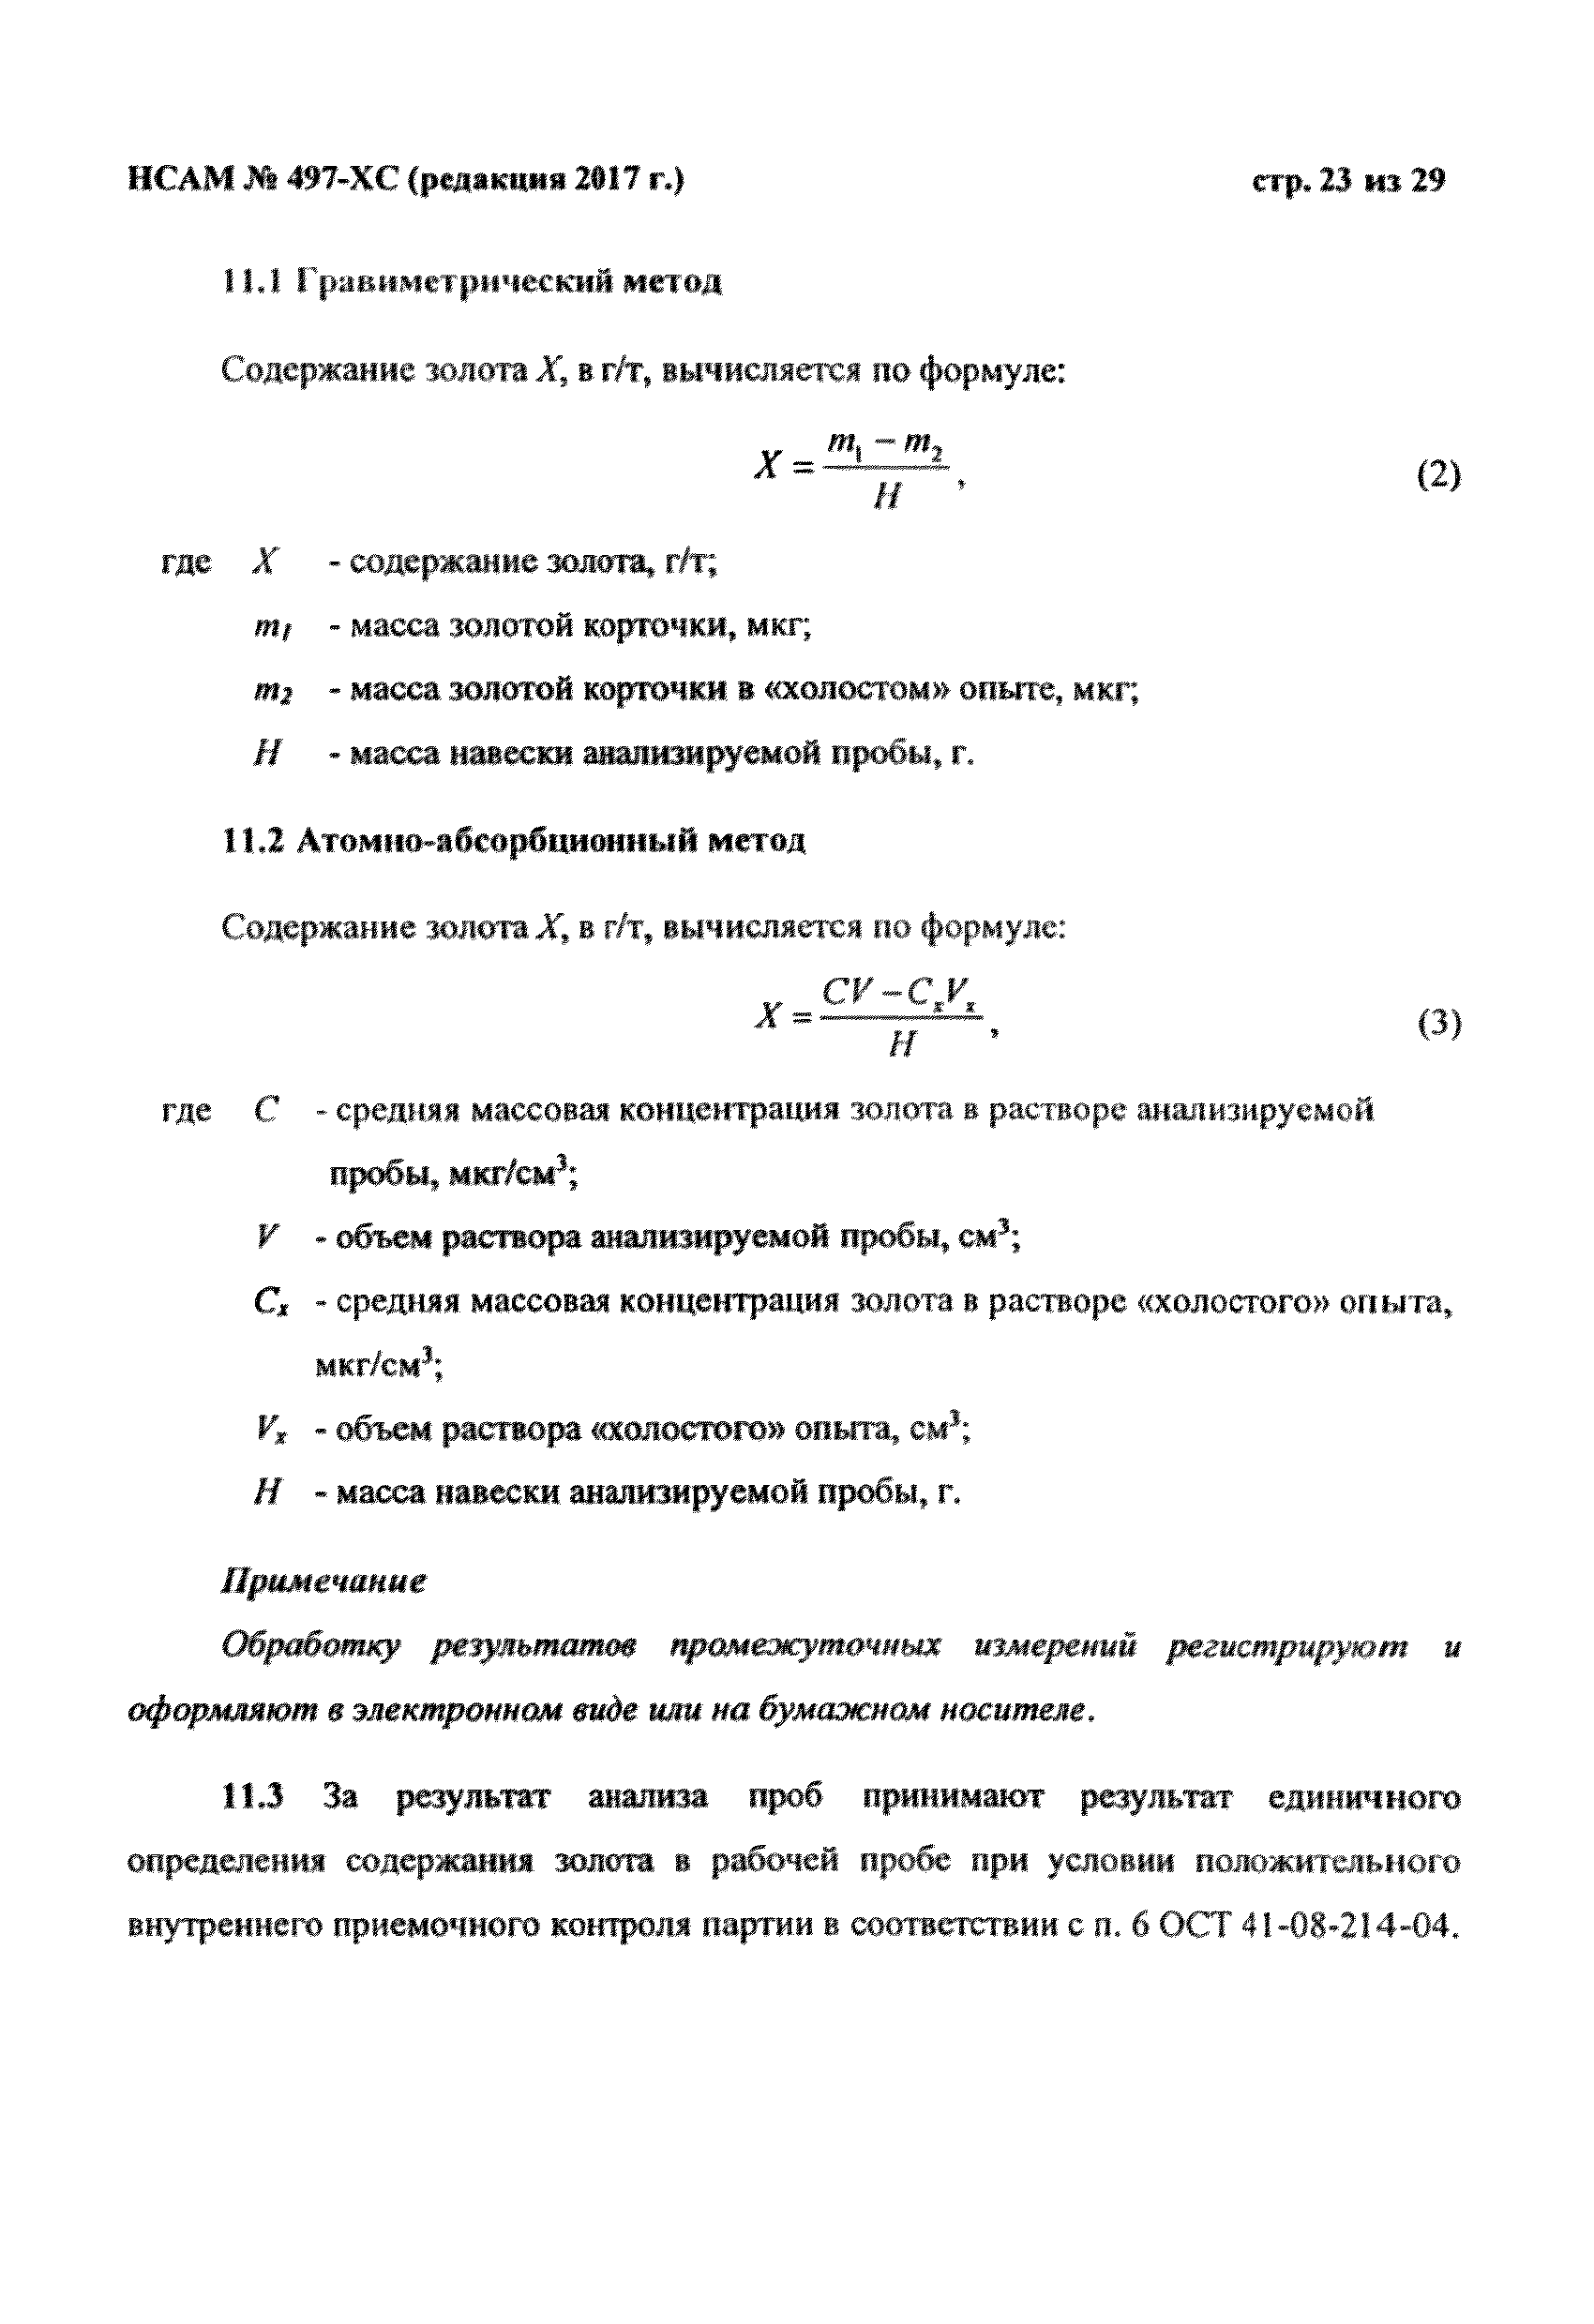 Методика НСАМ 497-ХС